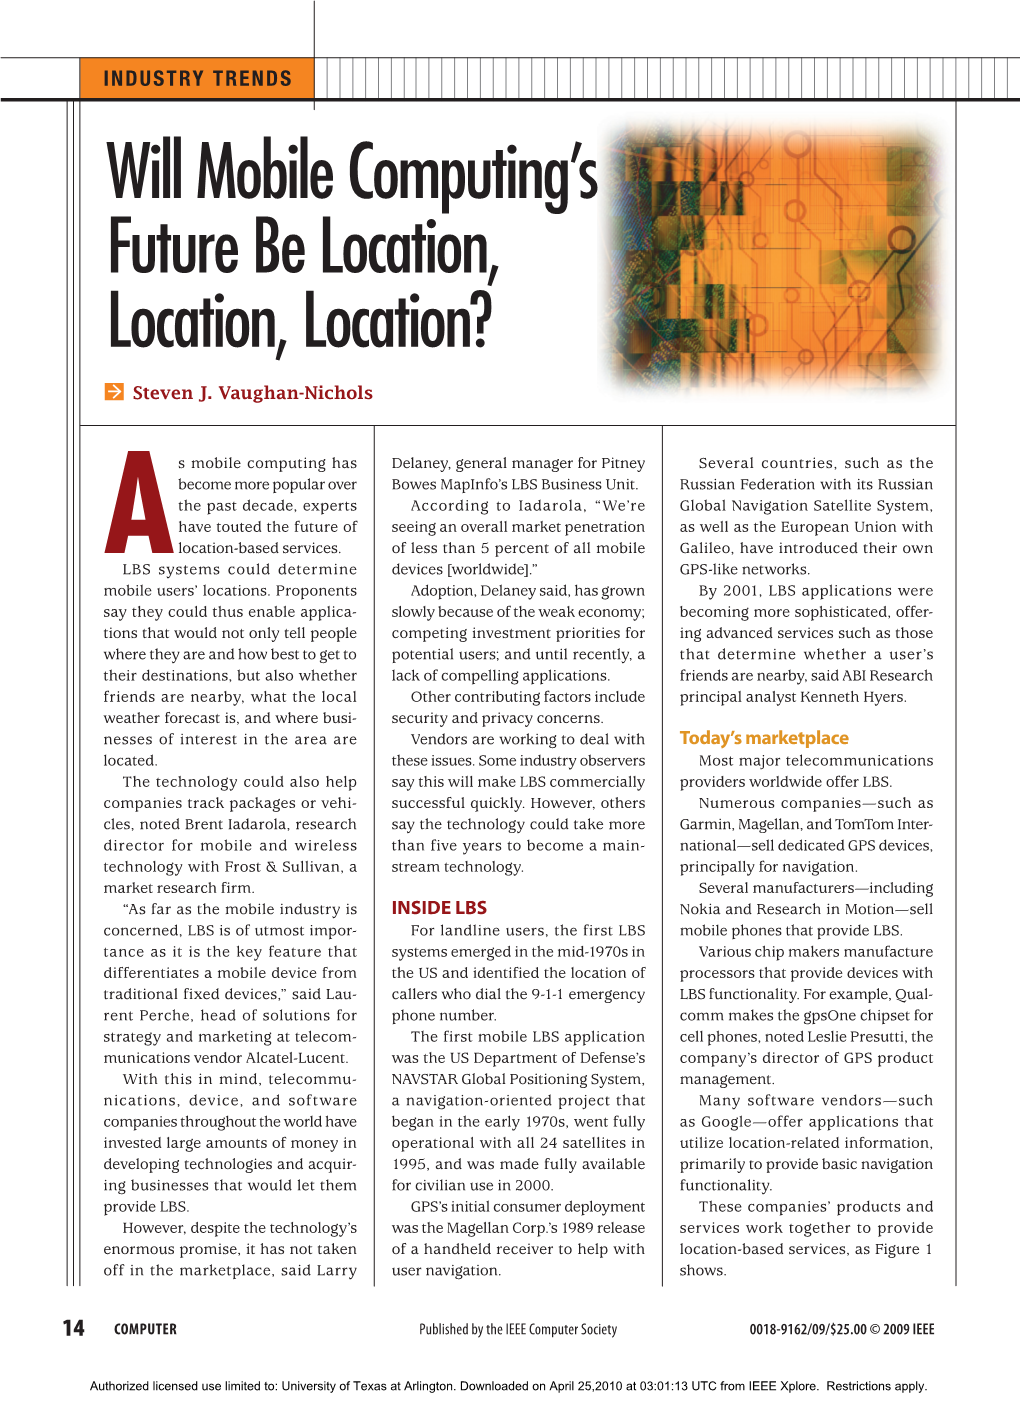 Will Mobile Computing's Future Be Location, Location, Location?